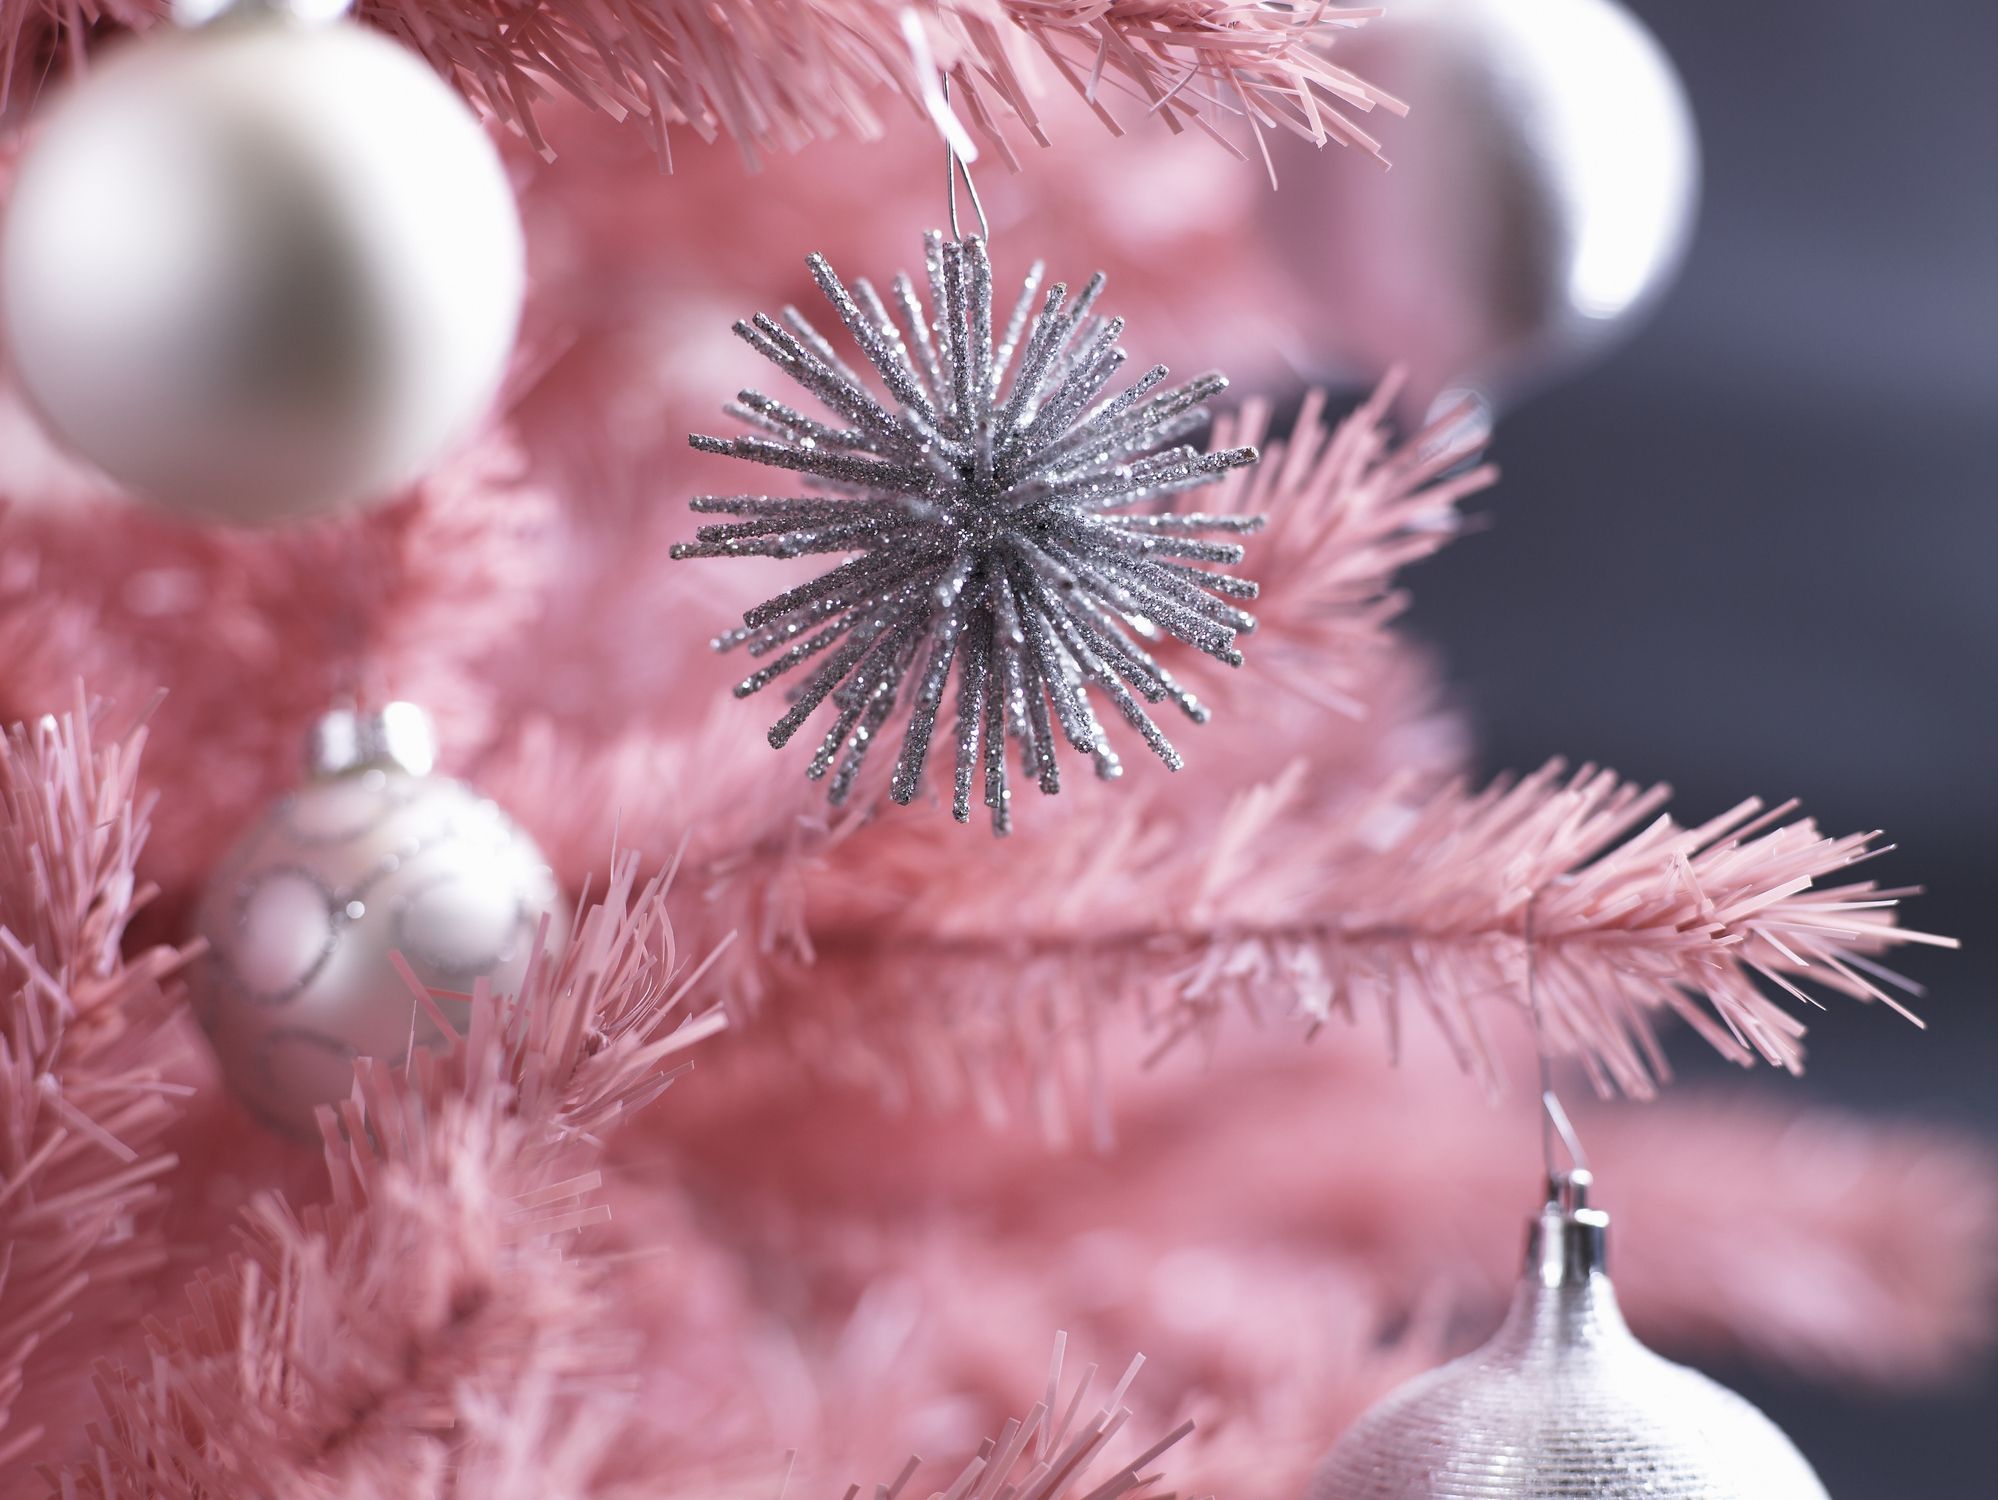 Božični okraski na roza božičnem drevesu, od blizu